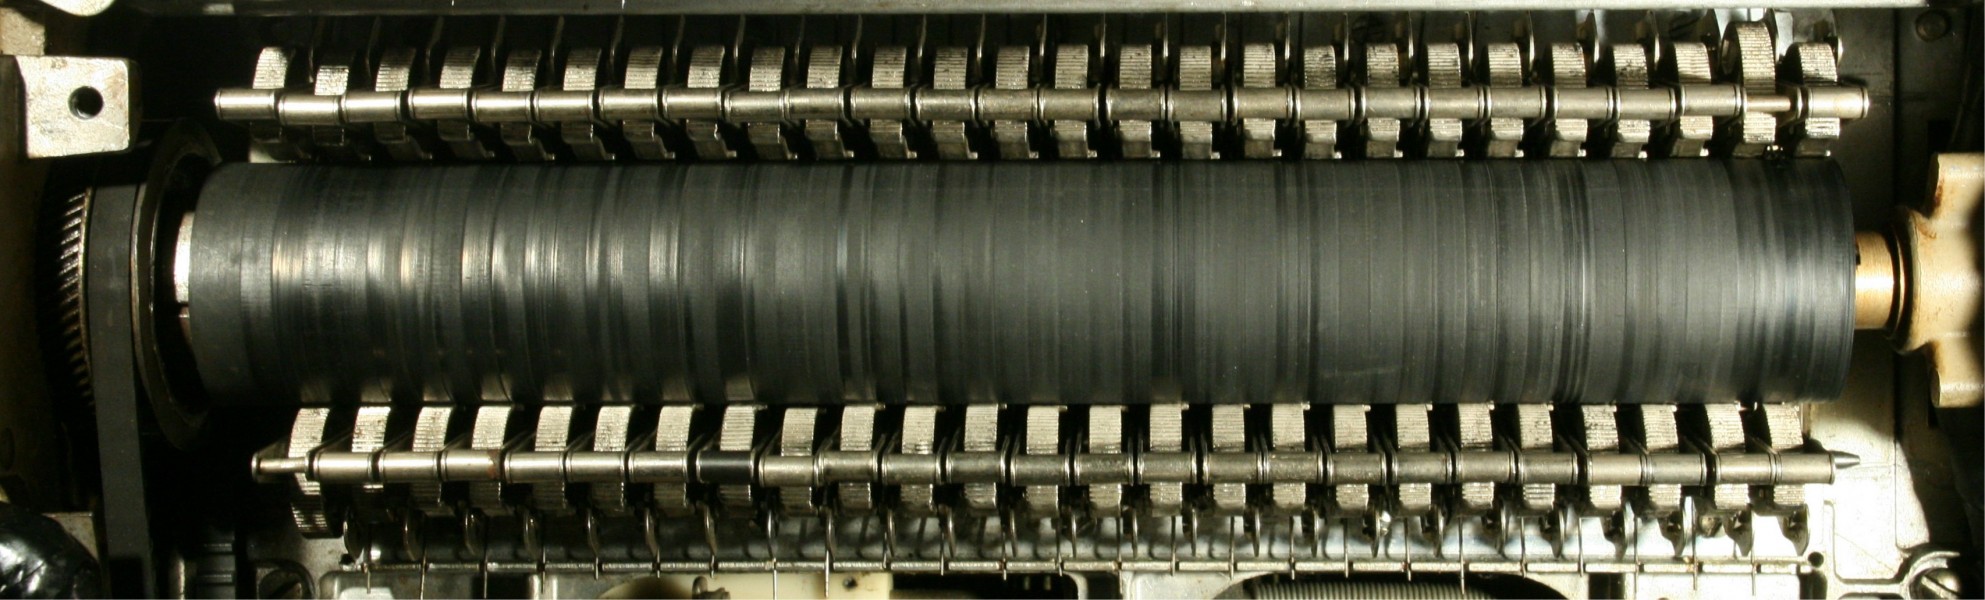 Flexowriter power roll